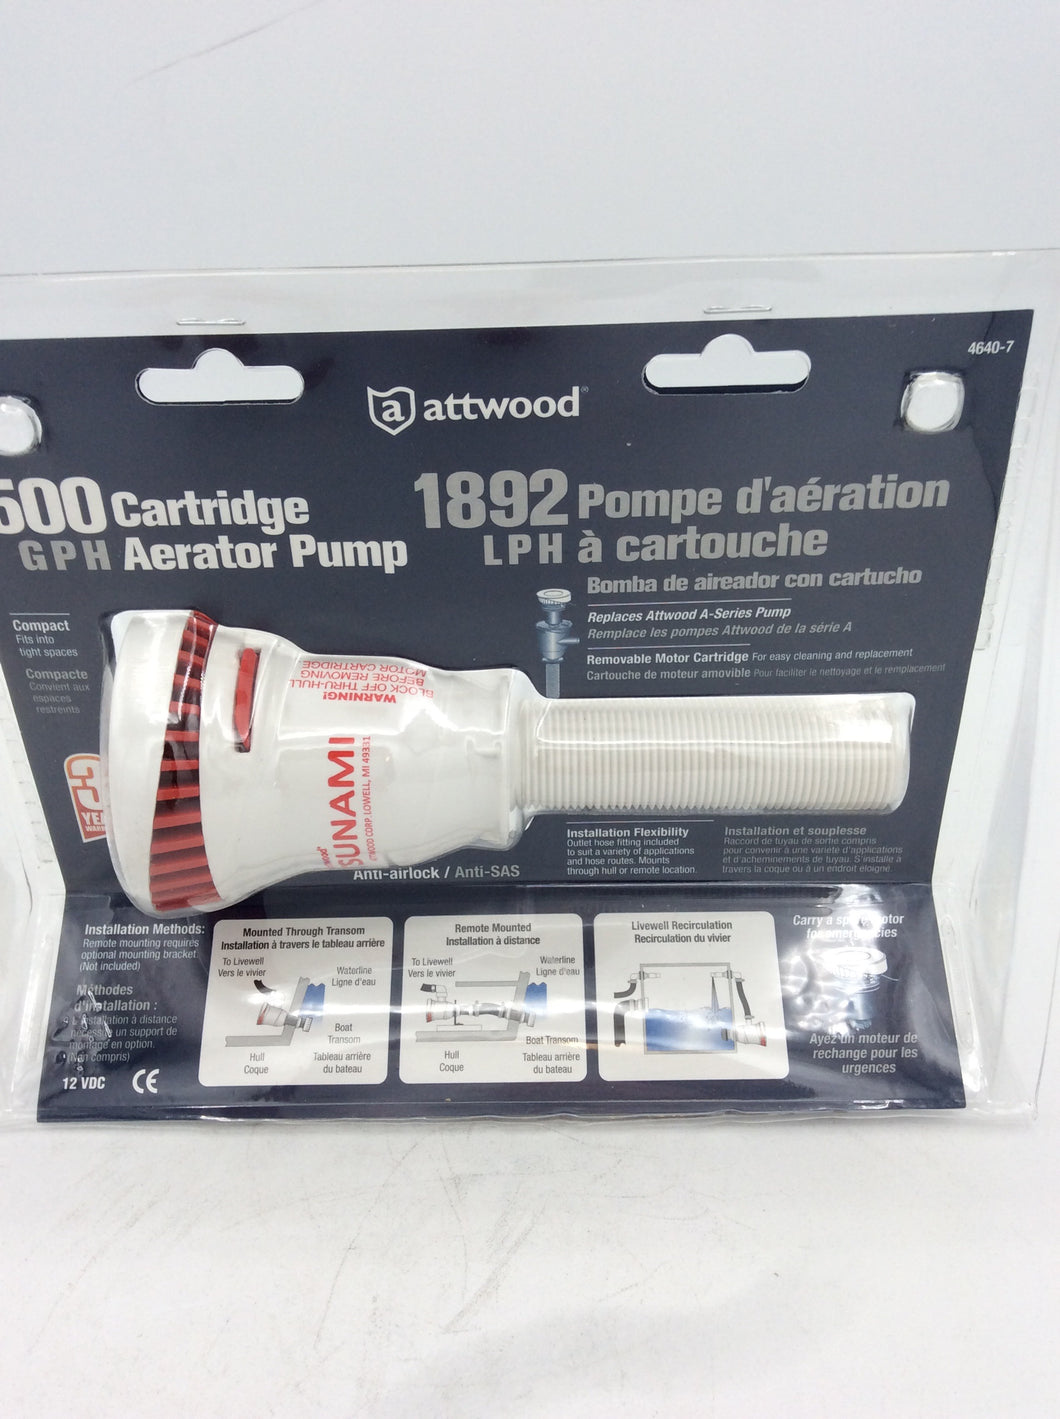 Attwood 500 GPH Cartridge Aerator Pump 4640-7